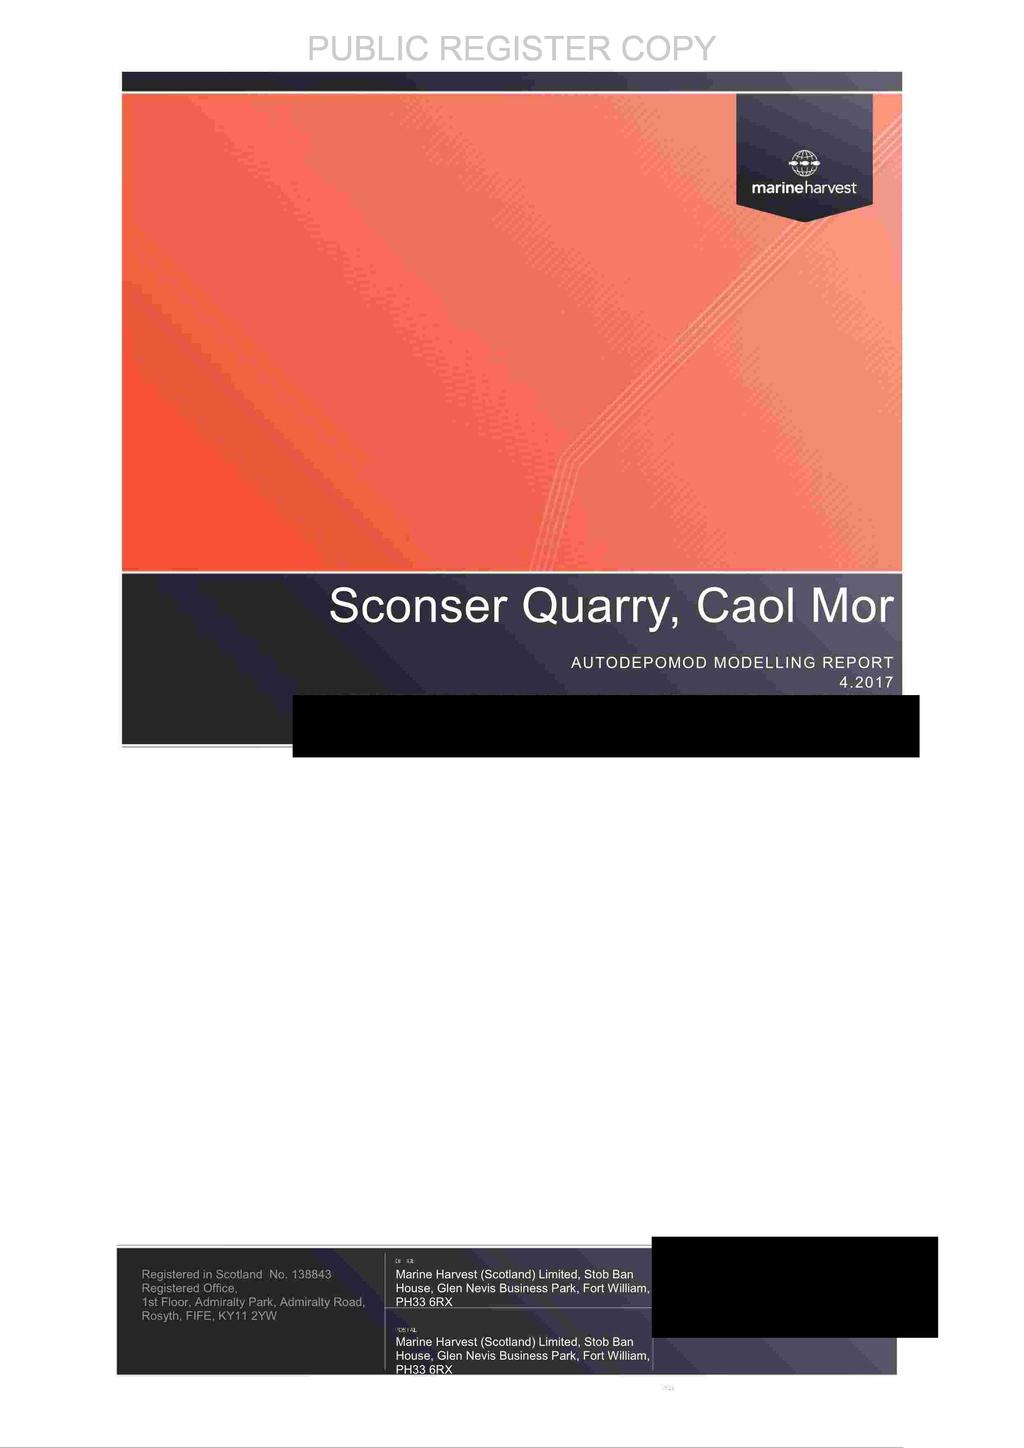 Sconser Quarry, Caol Mor AUTODEPOMOD MODELLIN G REPORT 4.2017 Registered in Scotland No.